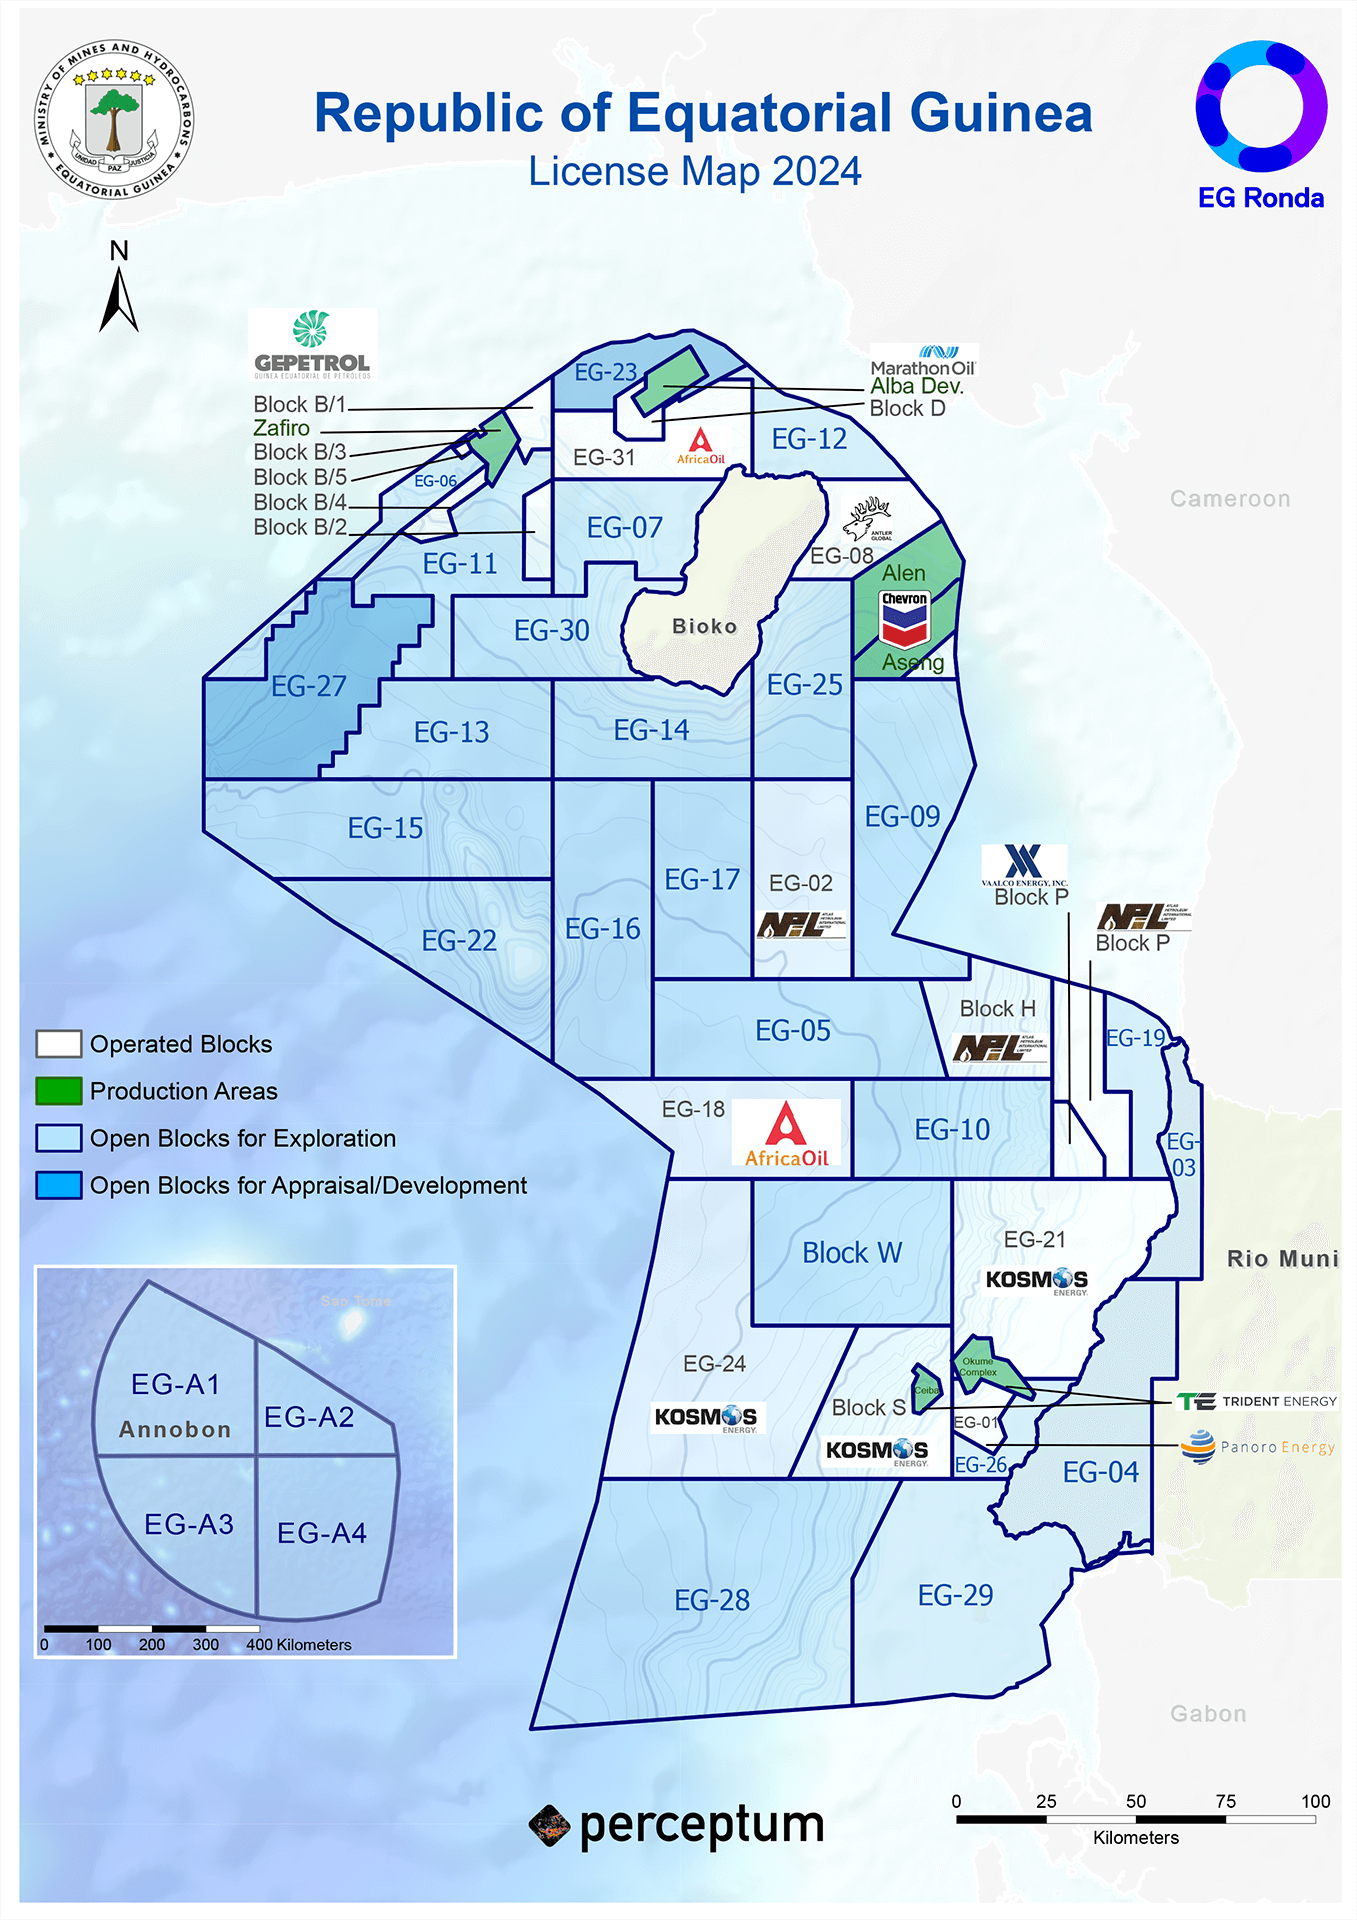 License Map 2024